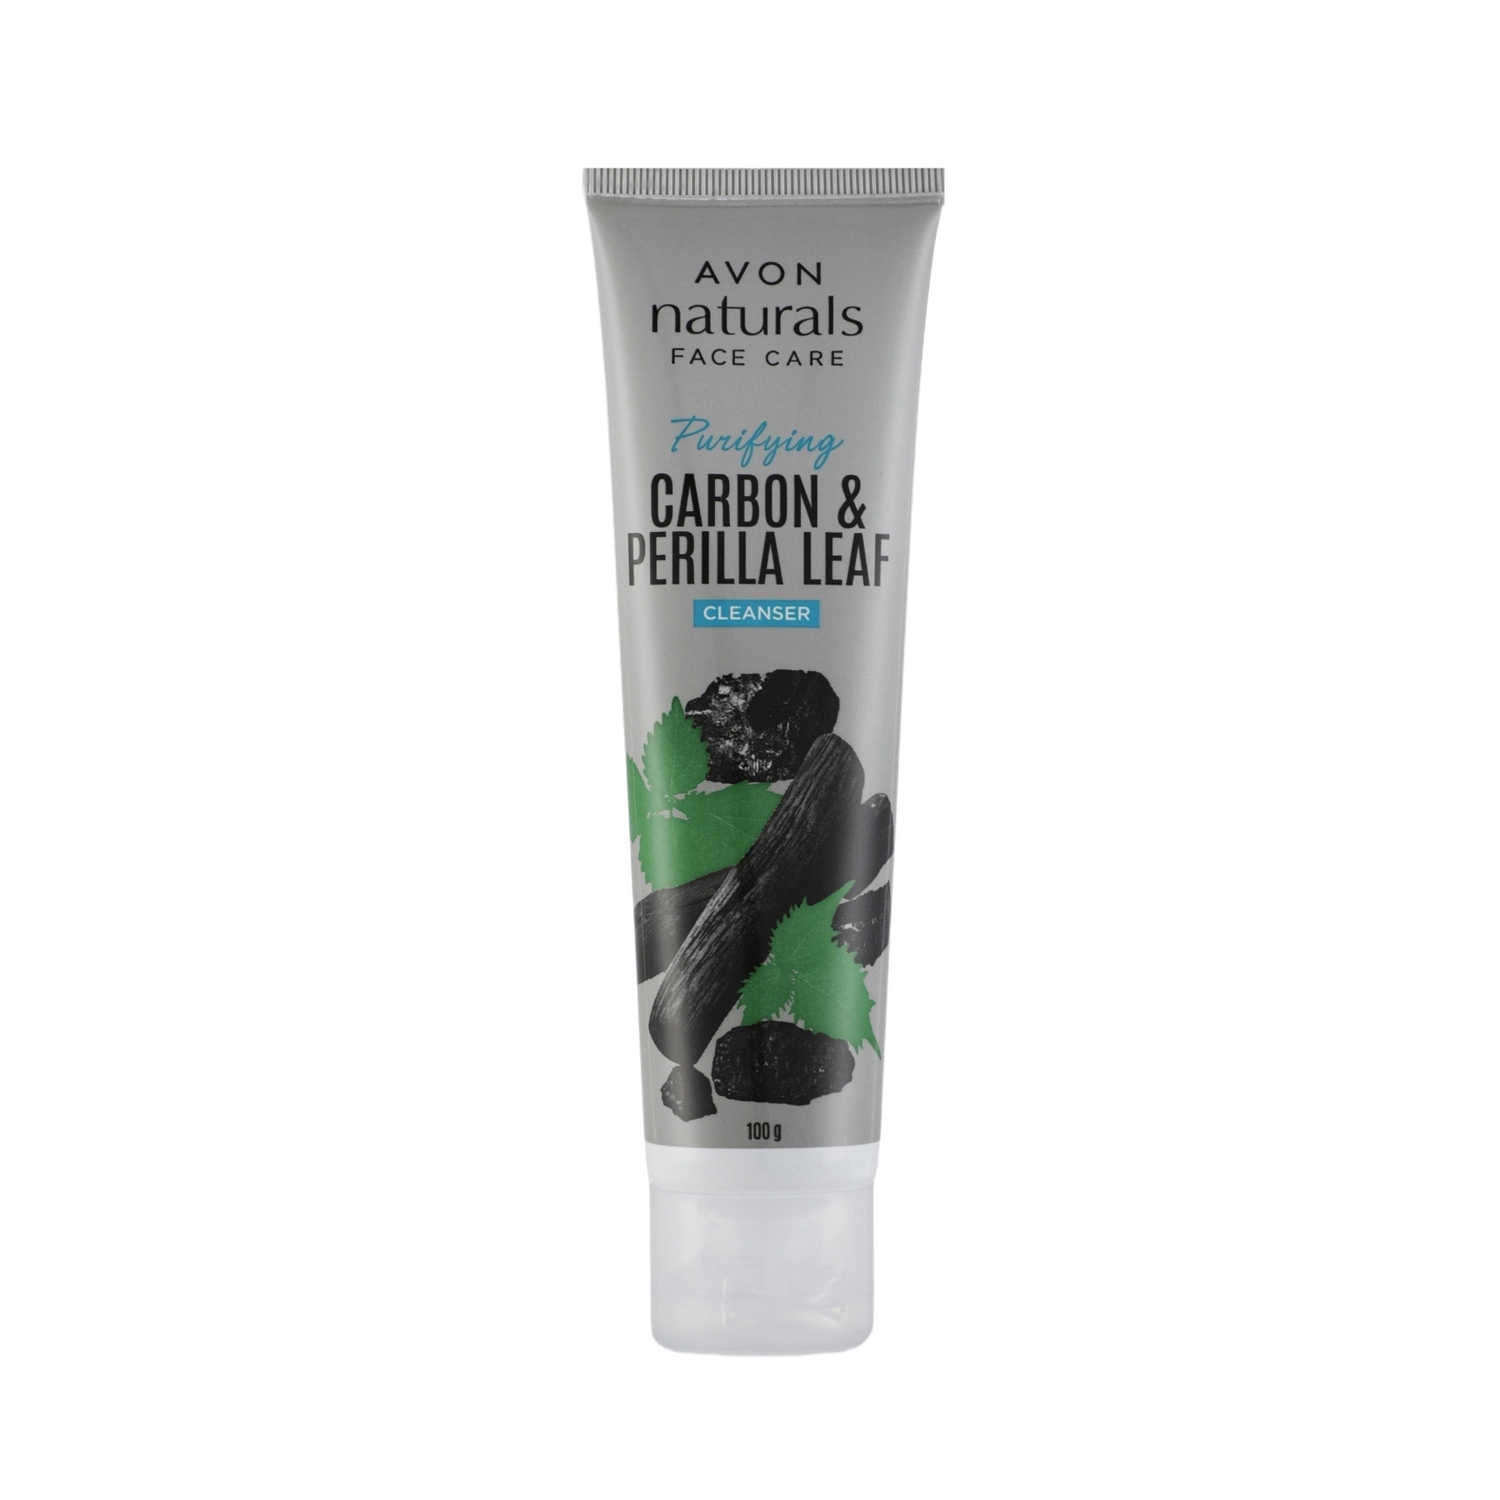 Avon Naturals Purifying Carbon & Perilla Leaf Cleanser (100g)